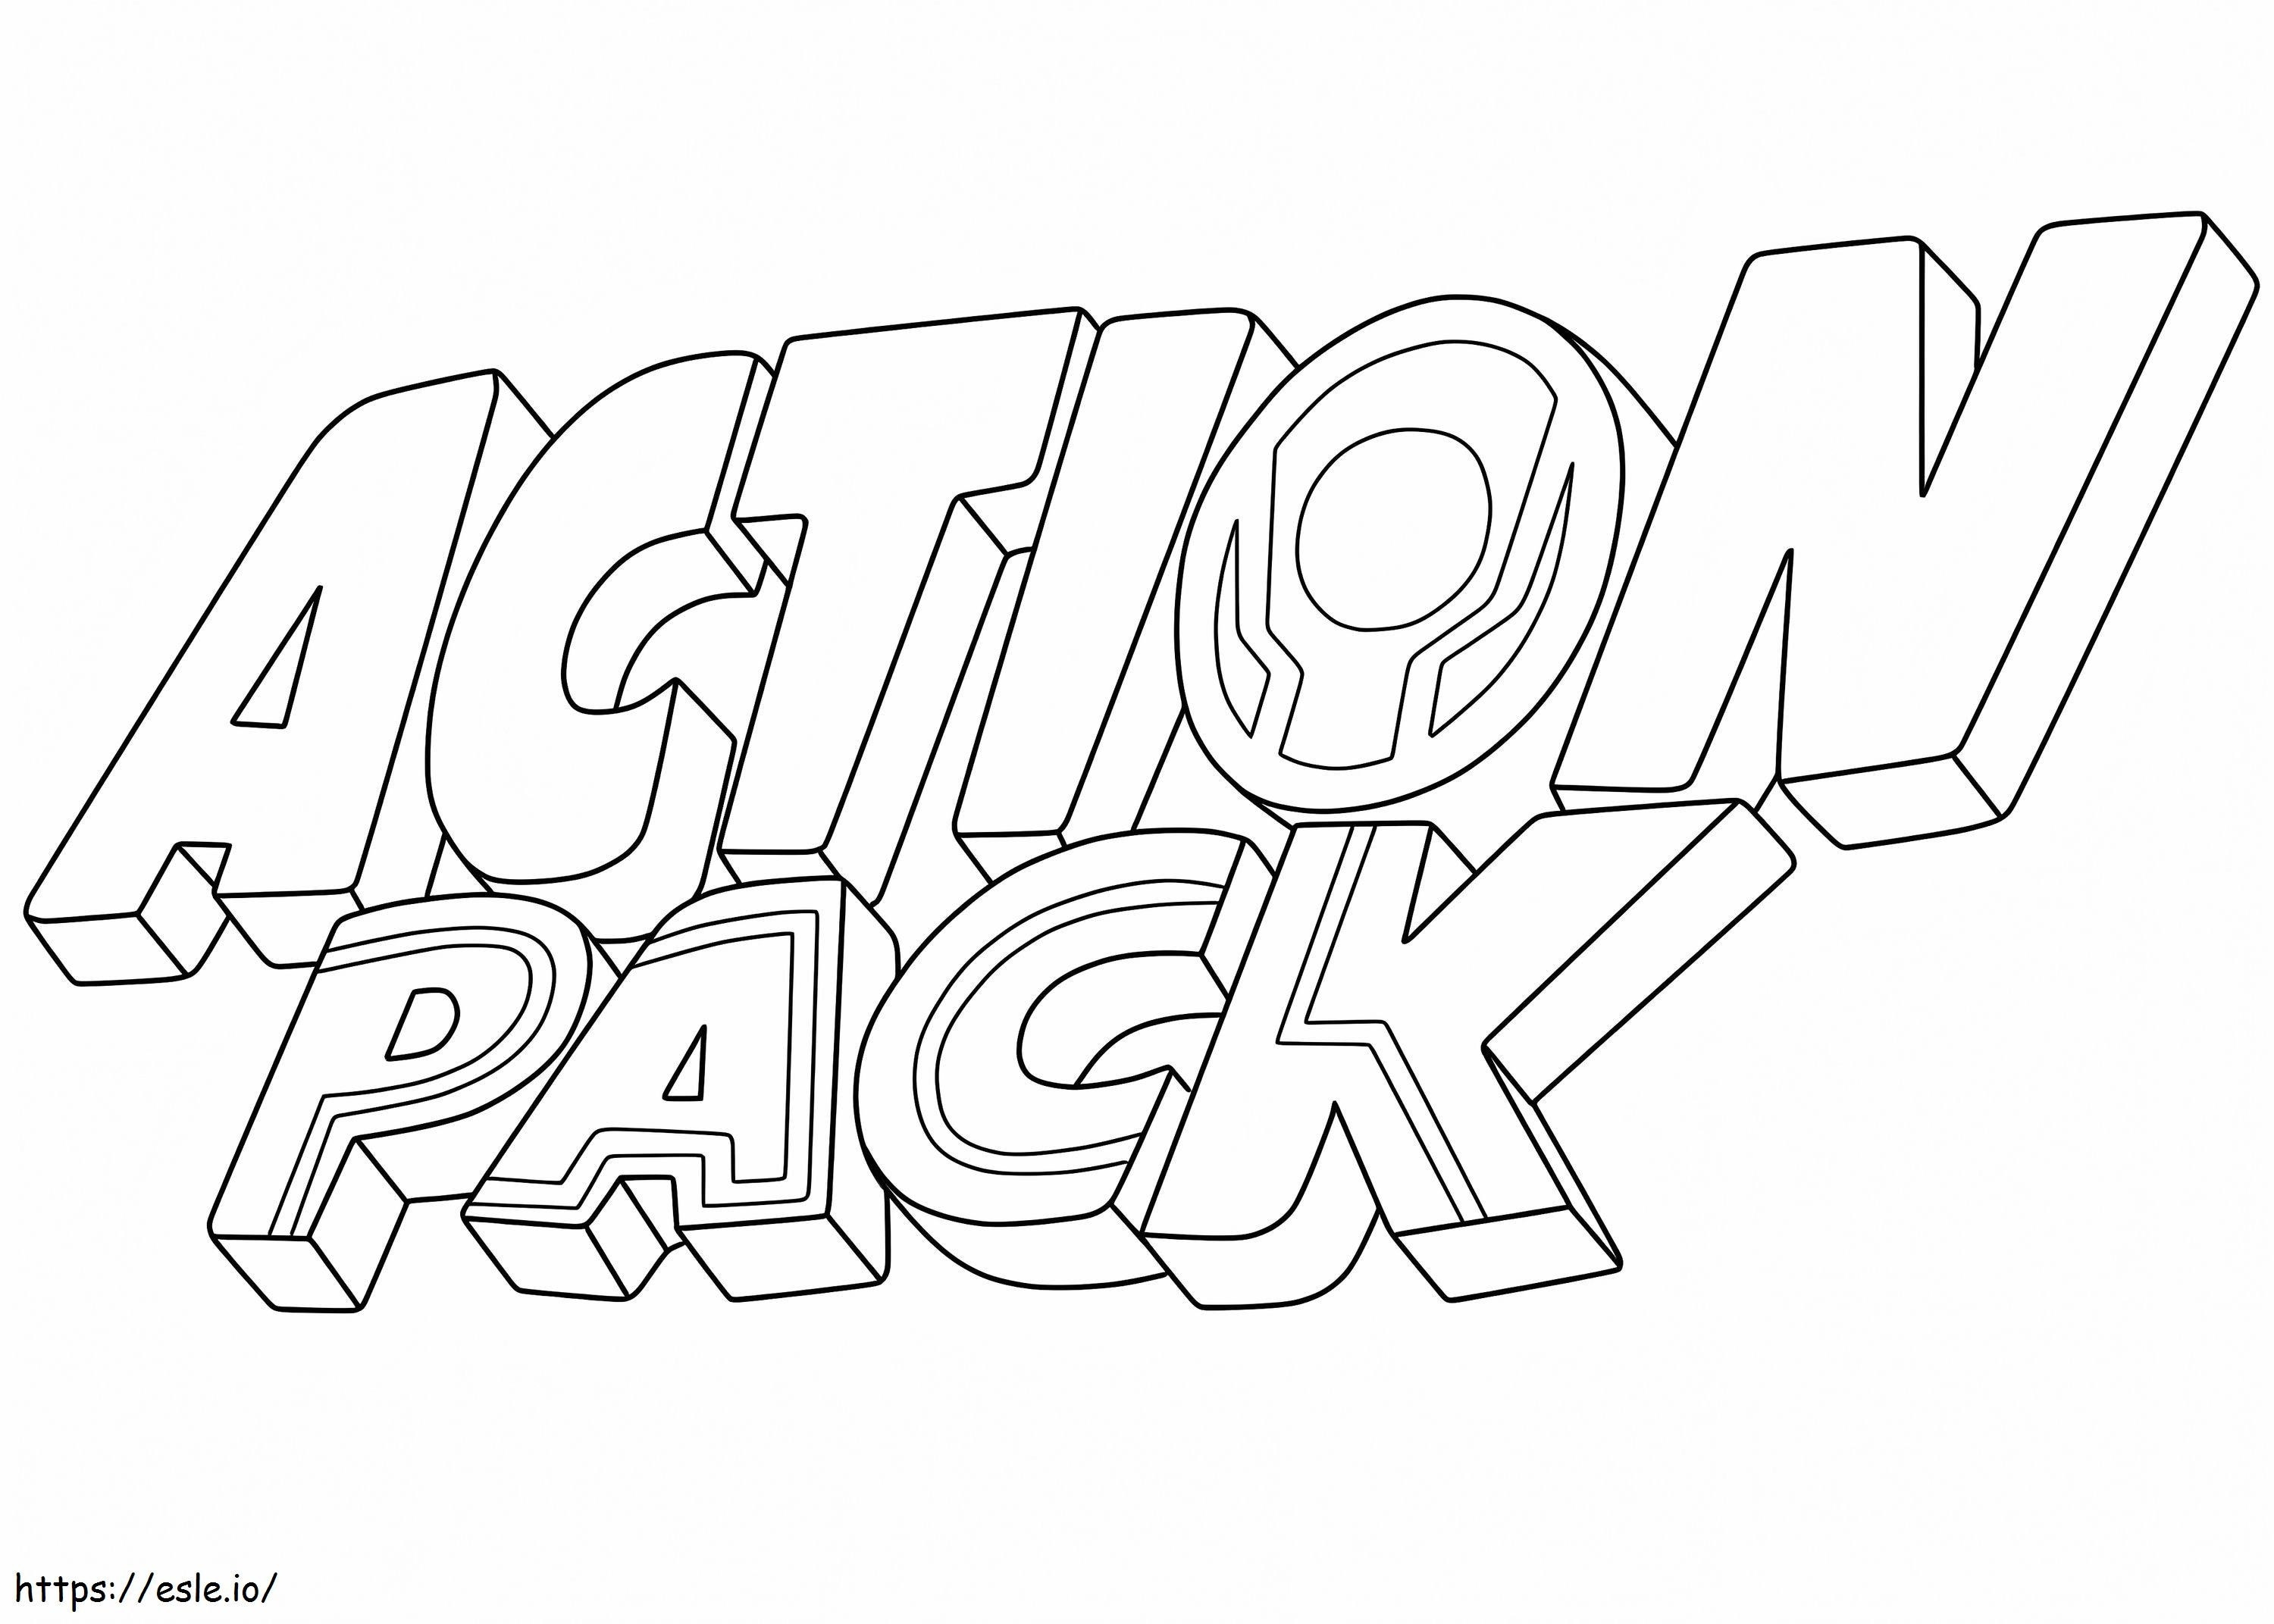 Action Pack-logo kleurplaat kleurplaat